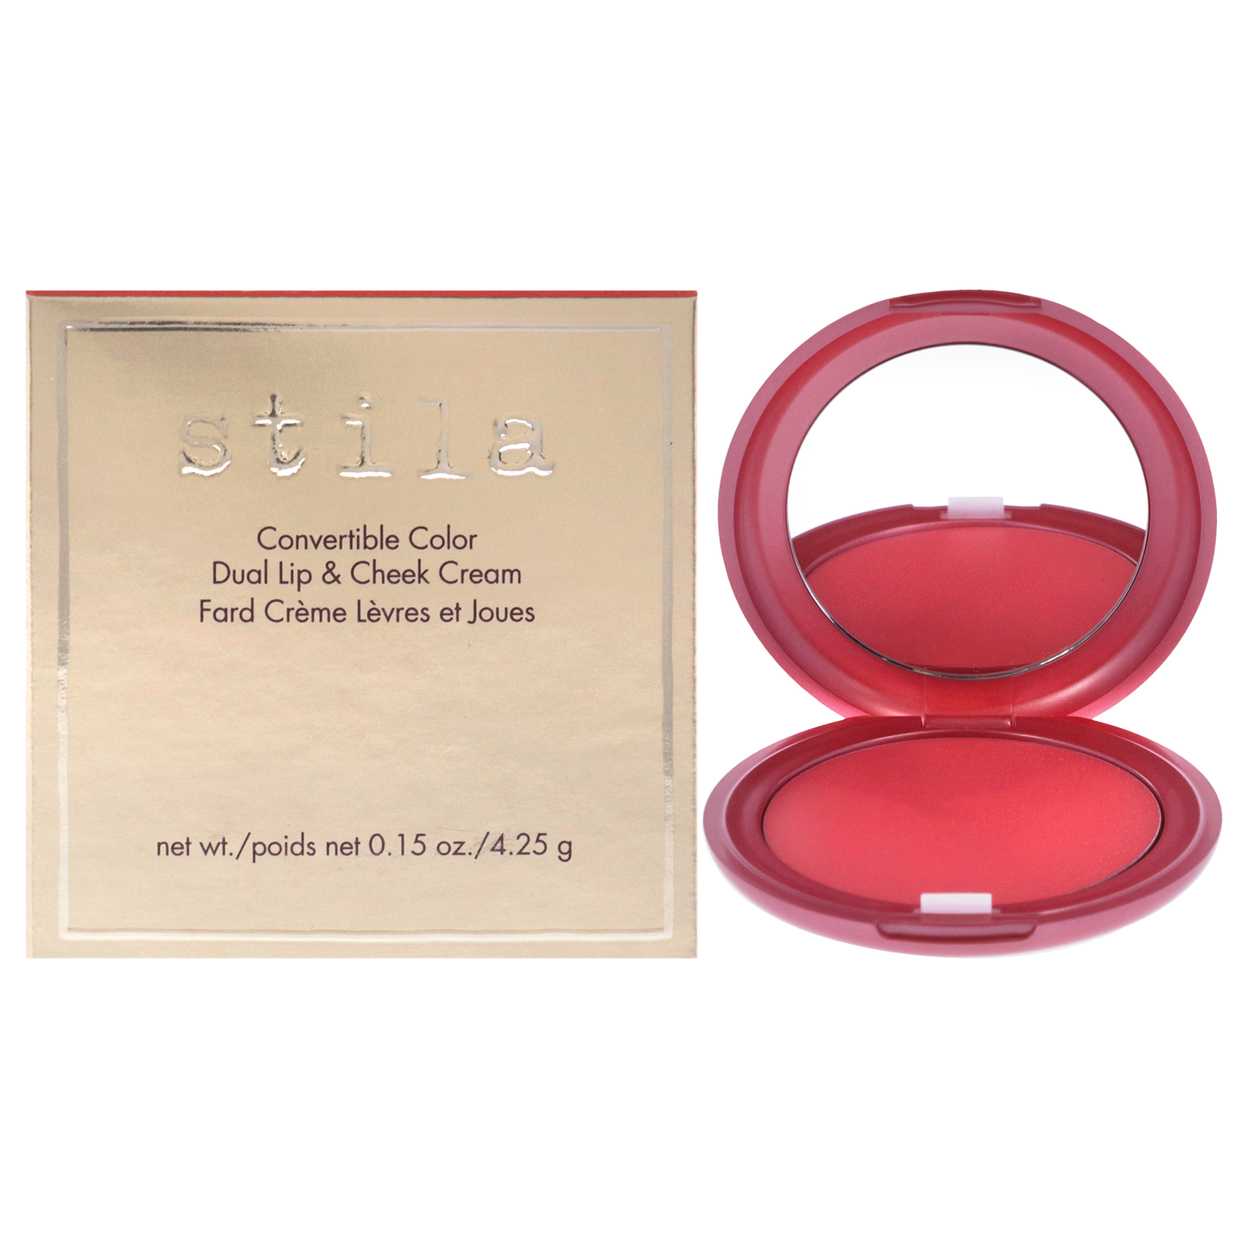 Stila Convertible Color Dual Lip And Cheek Cream - Petunia Makeup 0.15 Oz